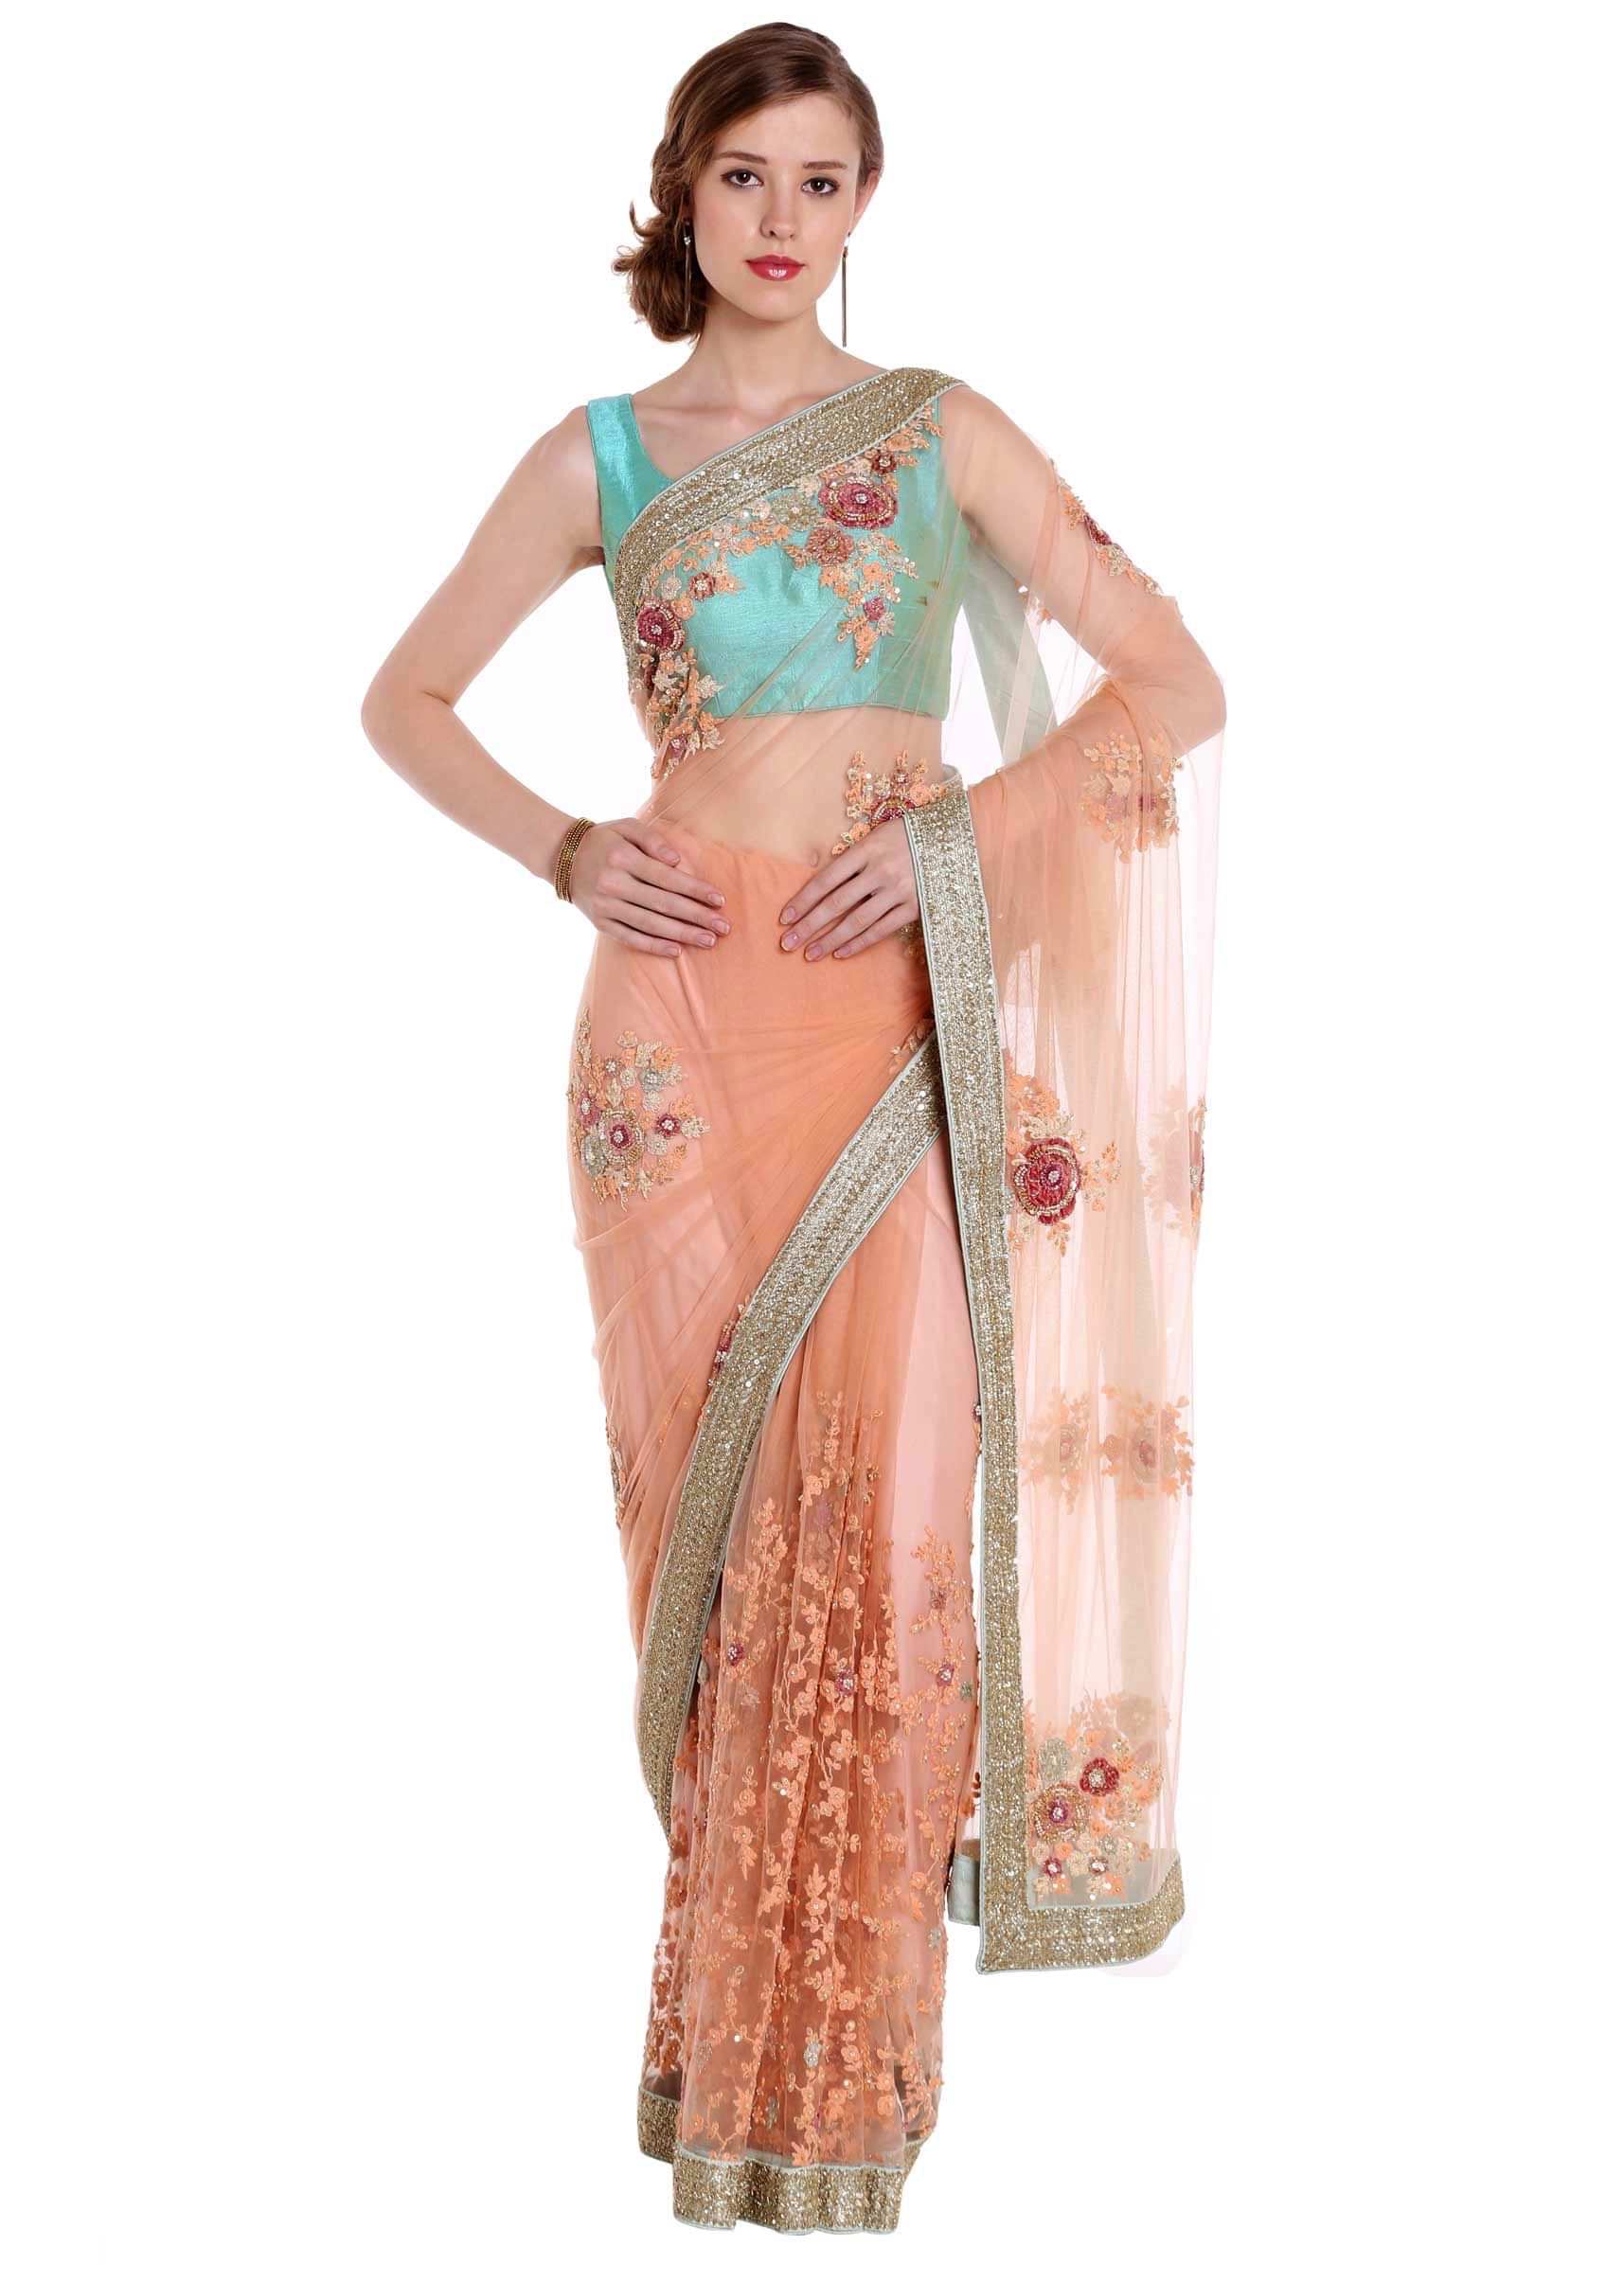 Light Orange Saree In Net With Floral Applique Embroidery Online - Kalki Fashion